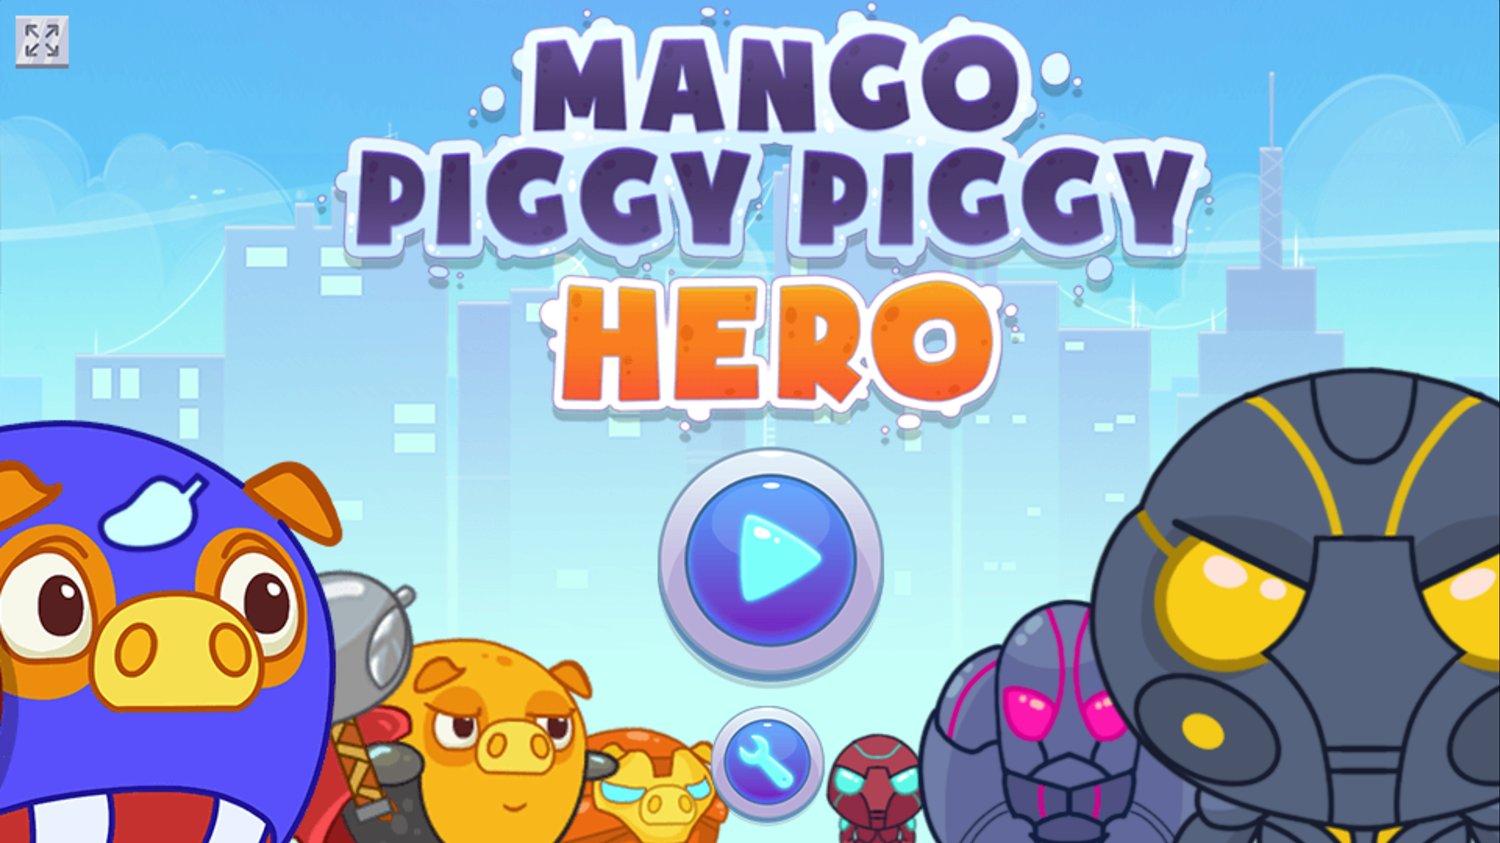 Mango Piggy Piggy Hero Game Welcome Screen Screenshot.